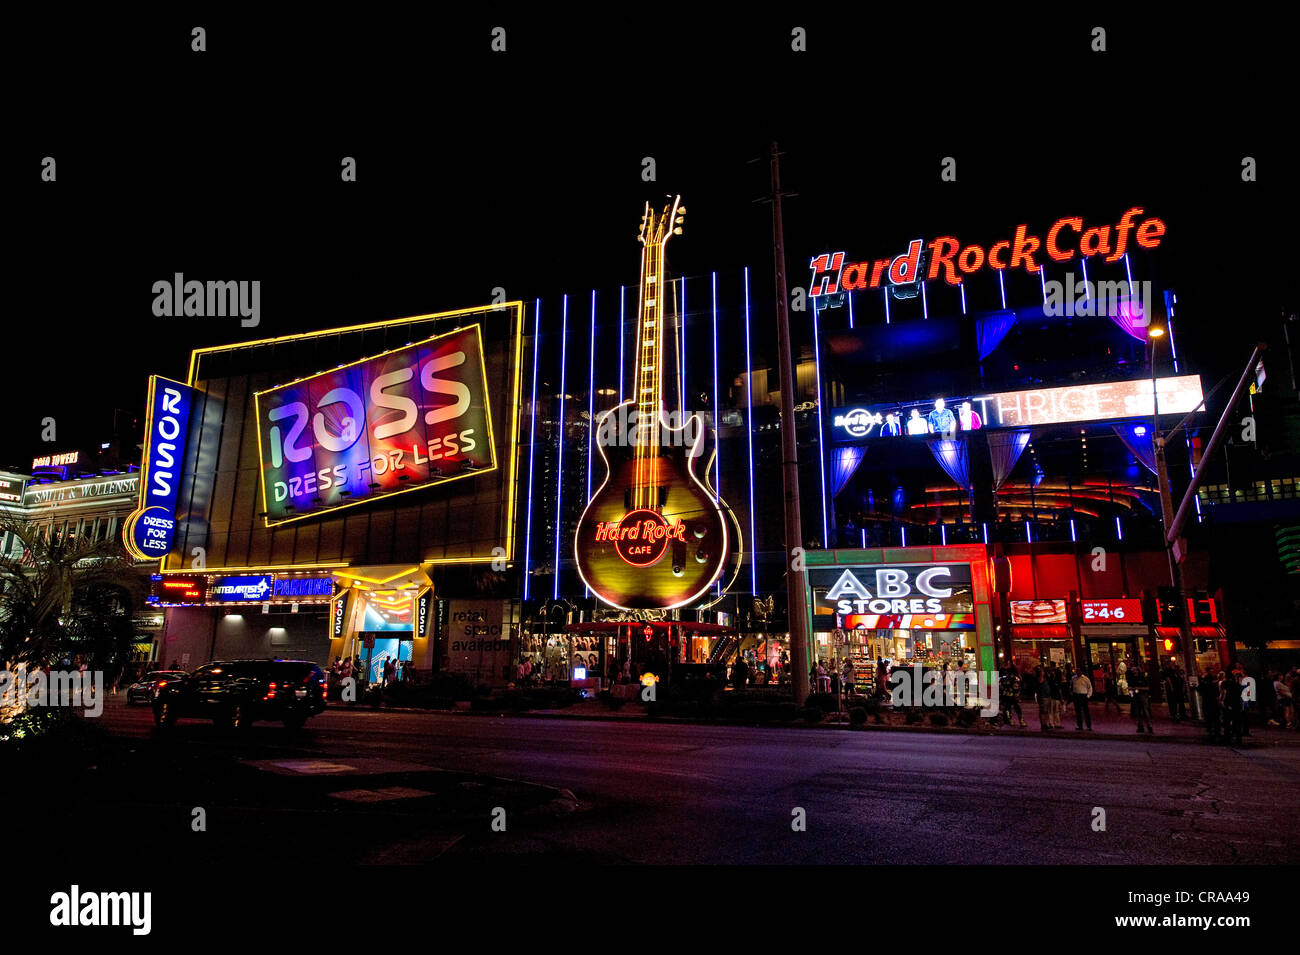 Hard Rock Cafe, Las Vegas, Nevada, USA Stockfoto